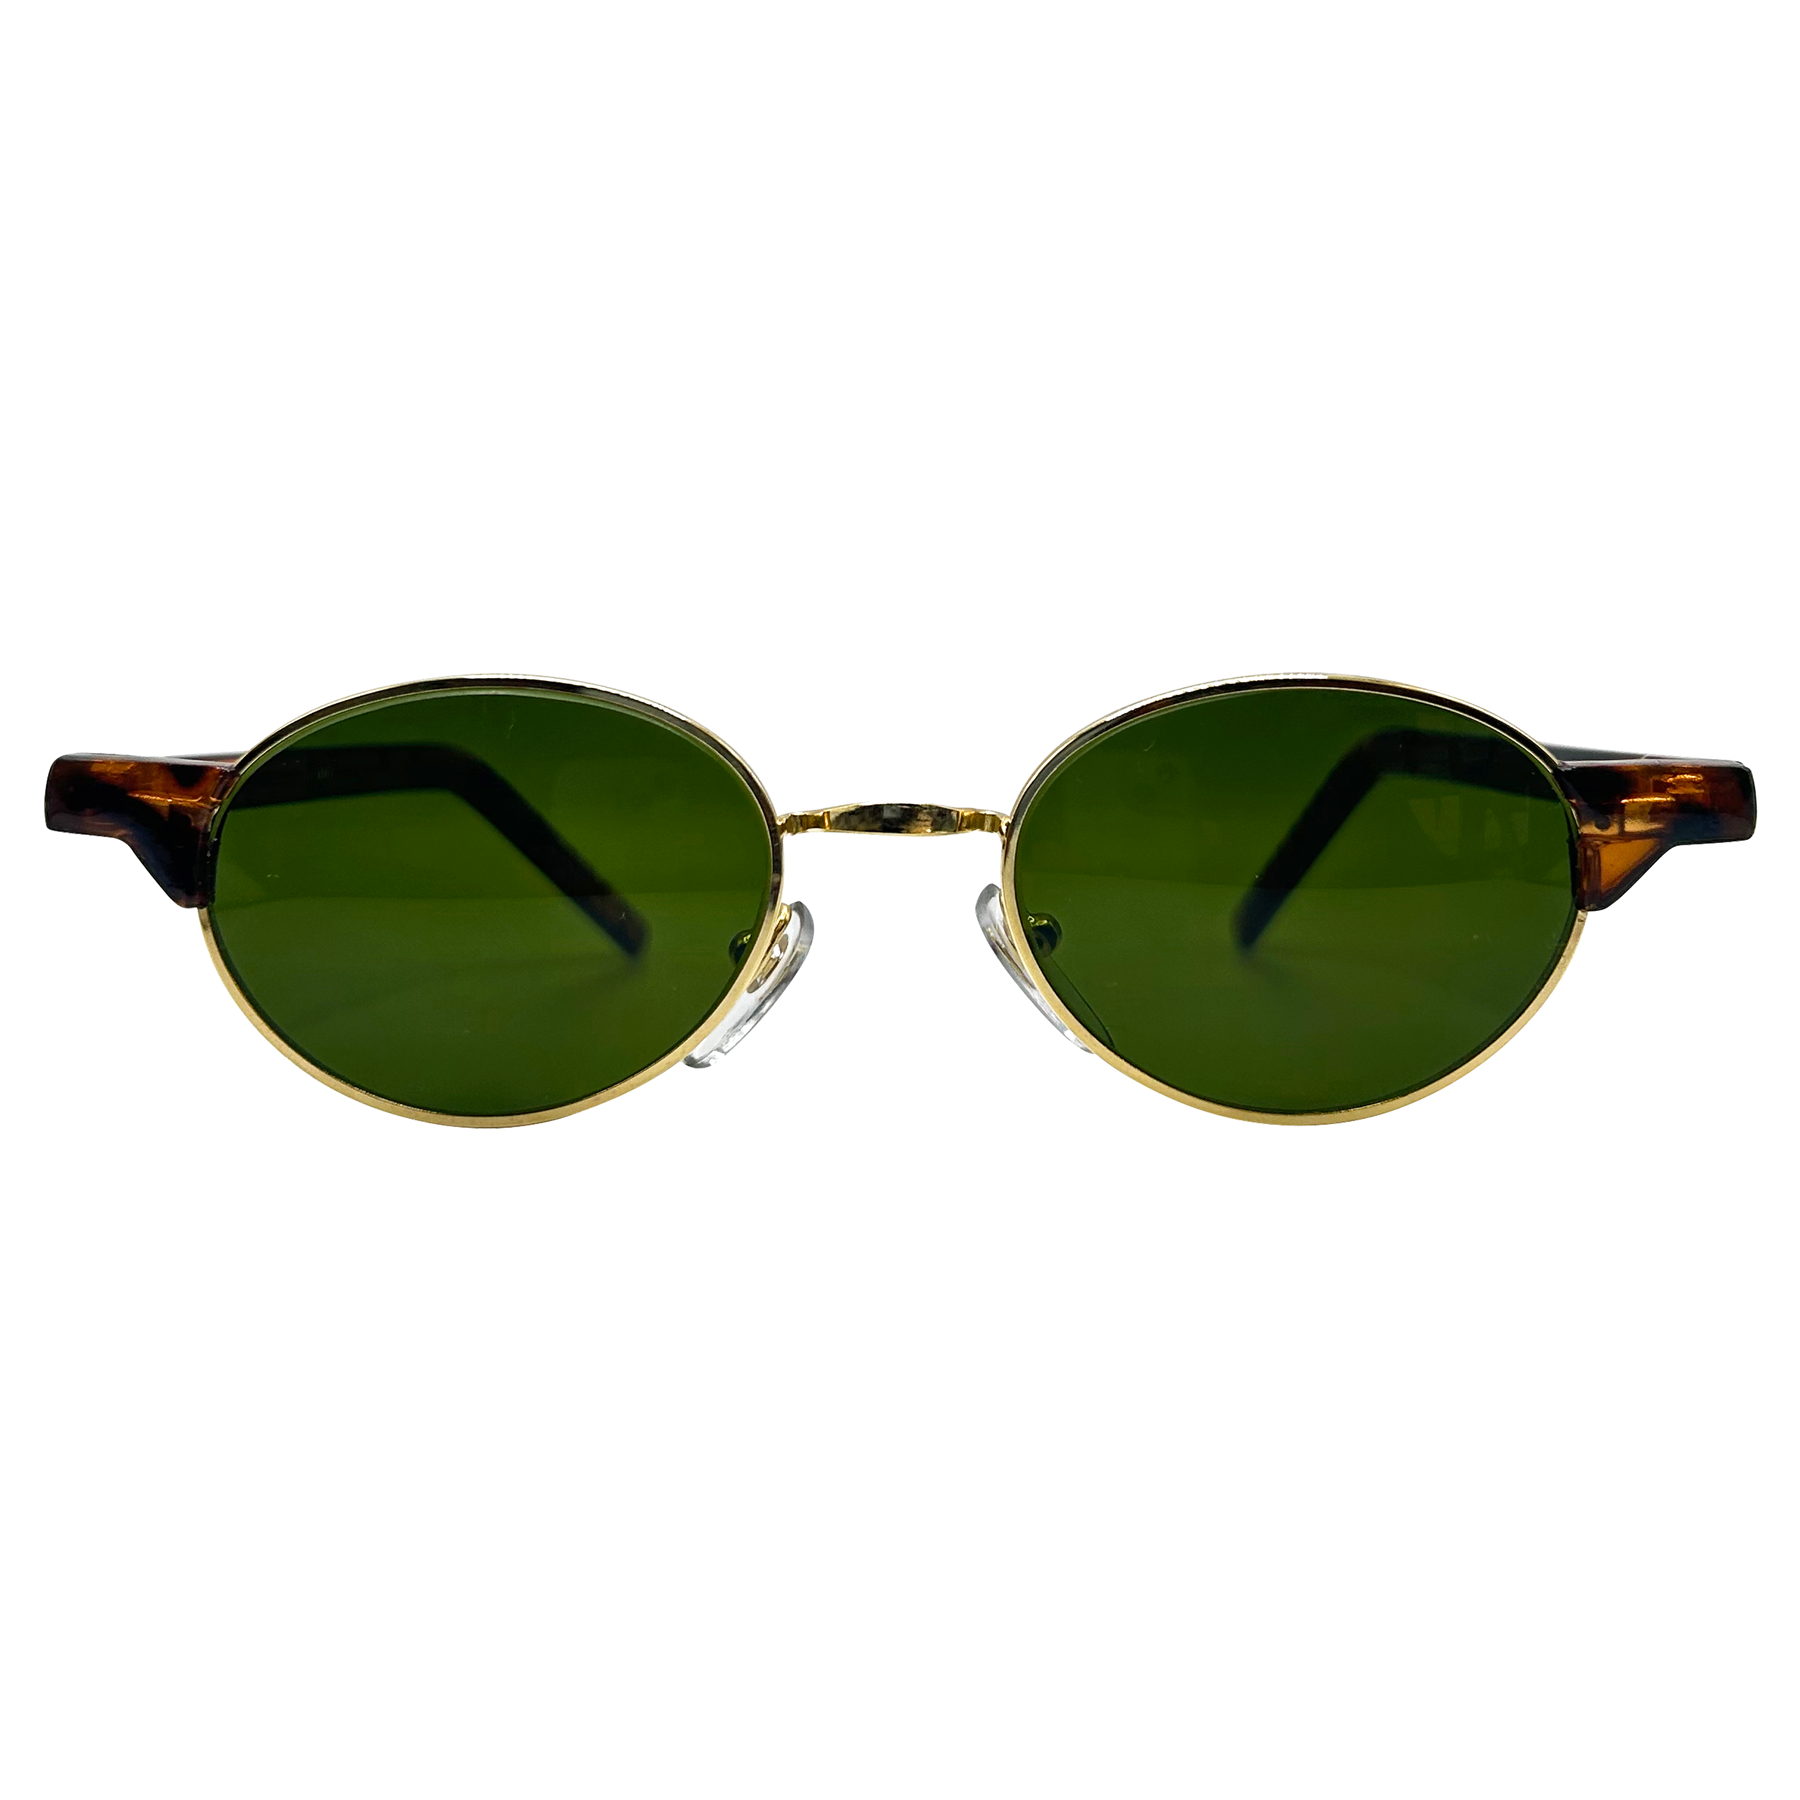 CESSNA Tortoise/Gold/Green Oval Sunglasses